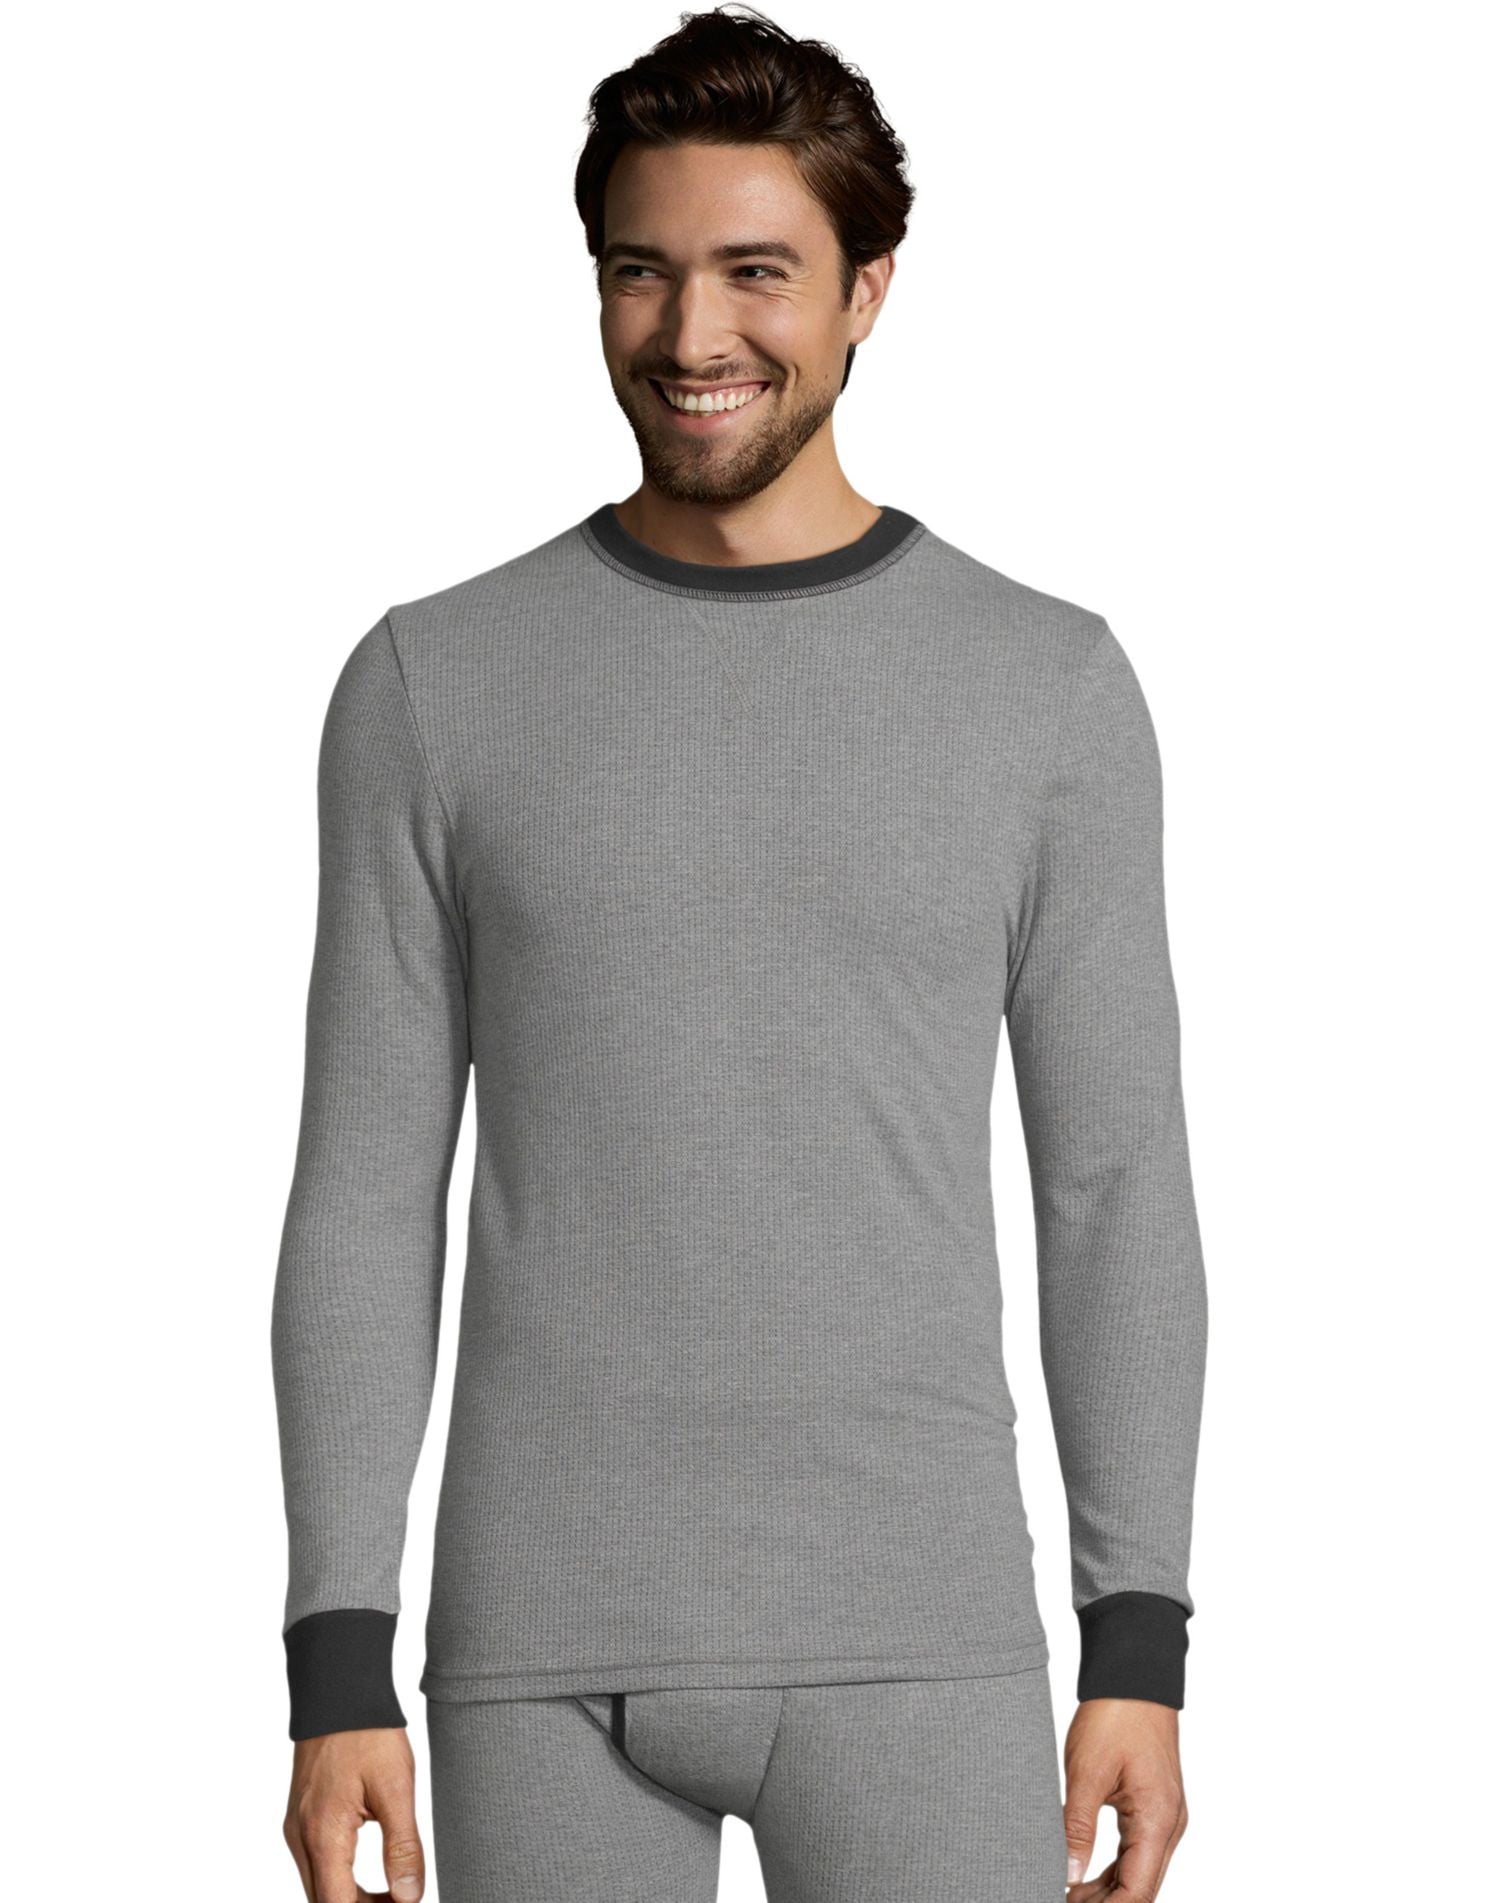 Hanes Men Crewneck Long Sleeve thermal underwear tops - Walmart.com